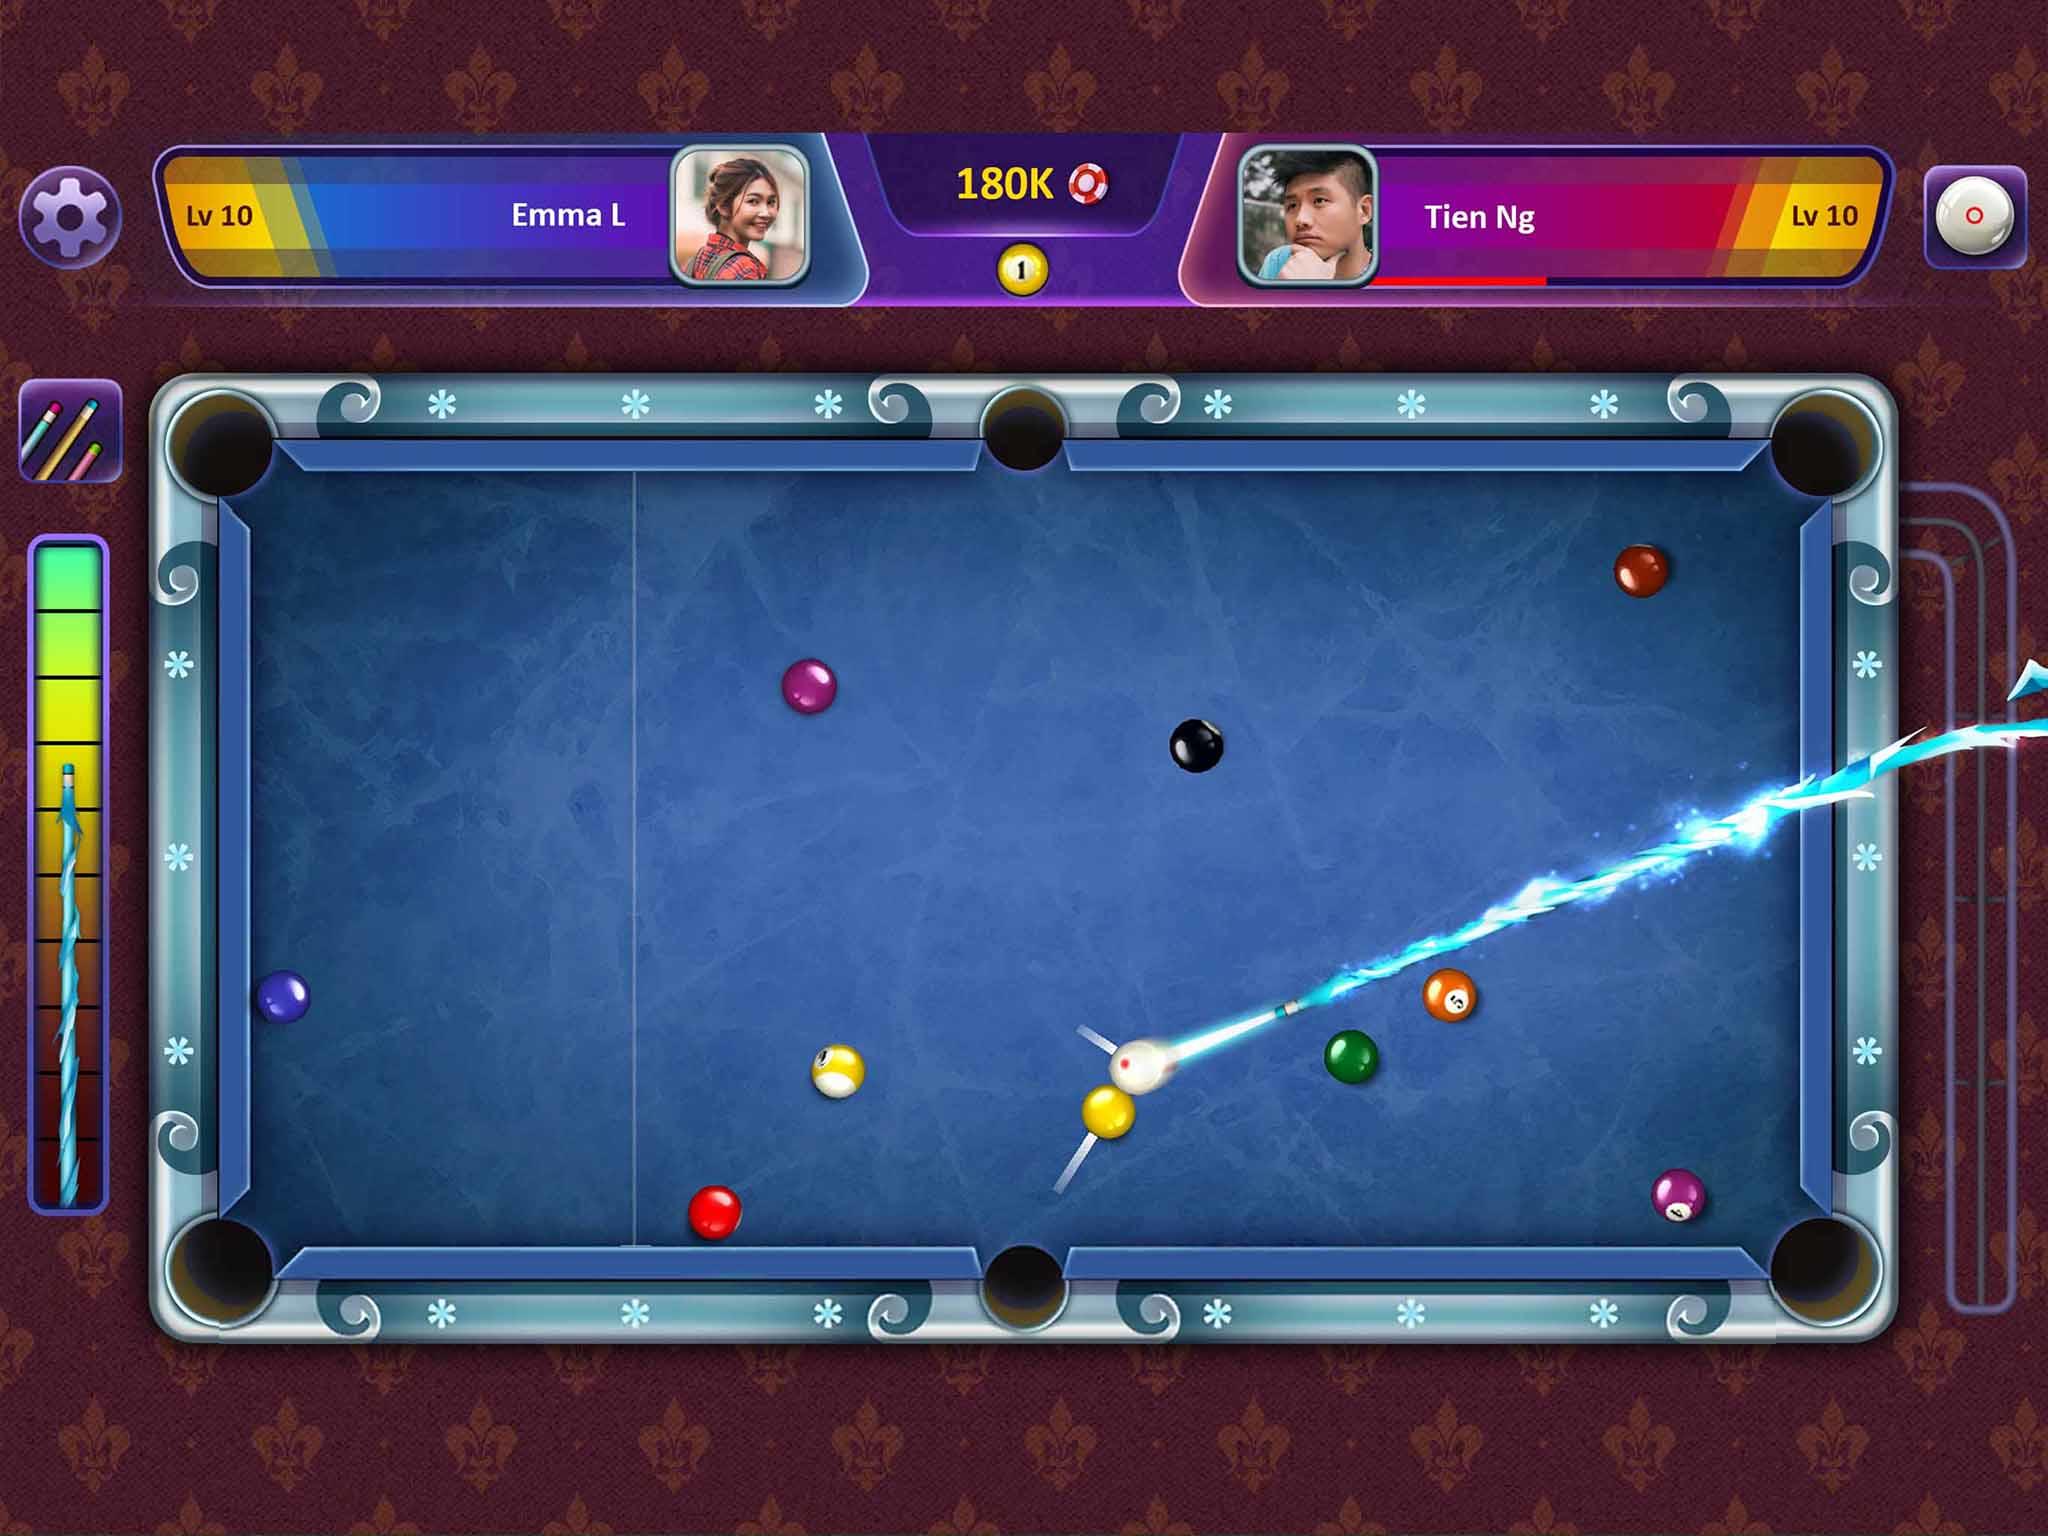 8 Ball Billiards - Offline on the App Store